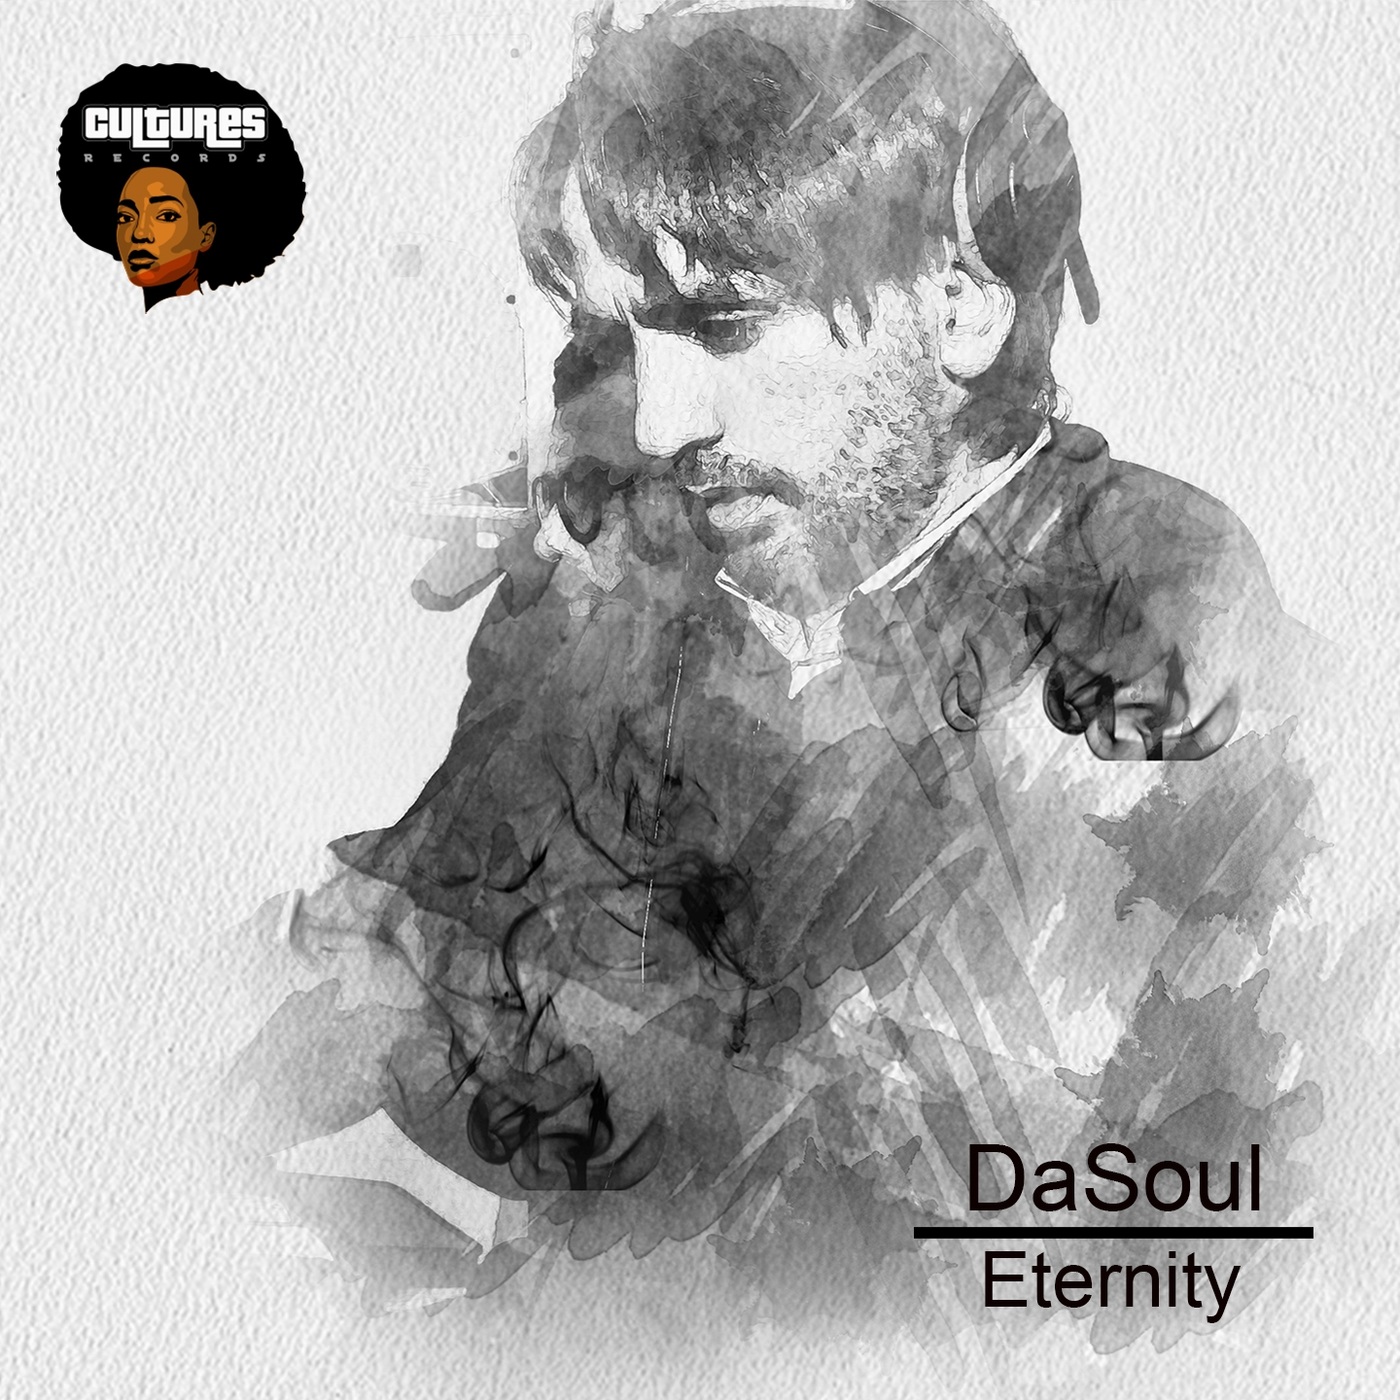 DaSoul - Eternity / Cultures Records